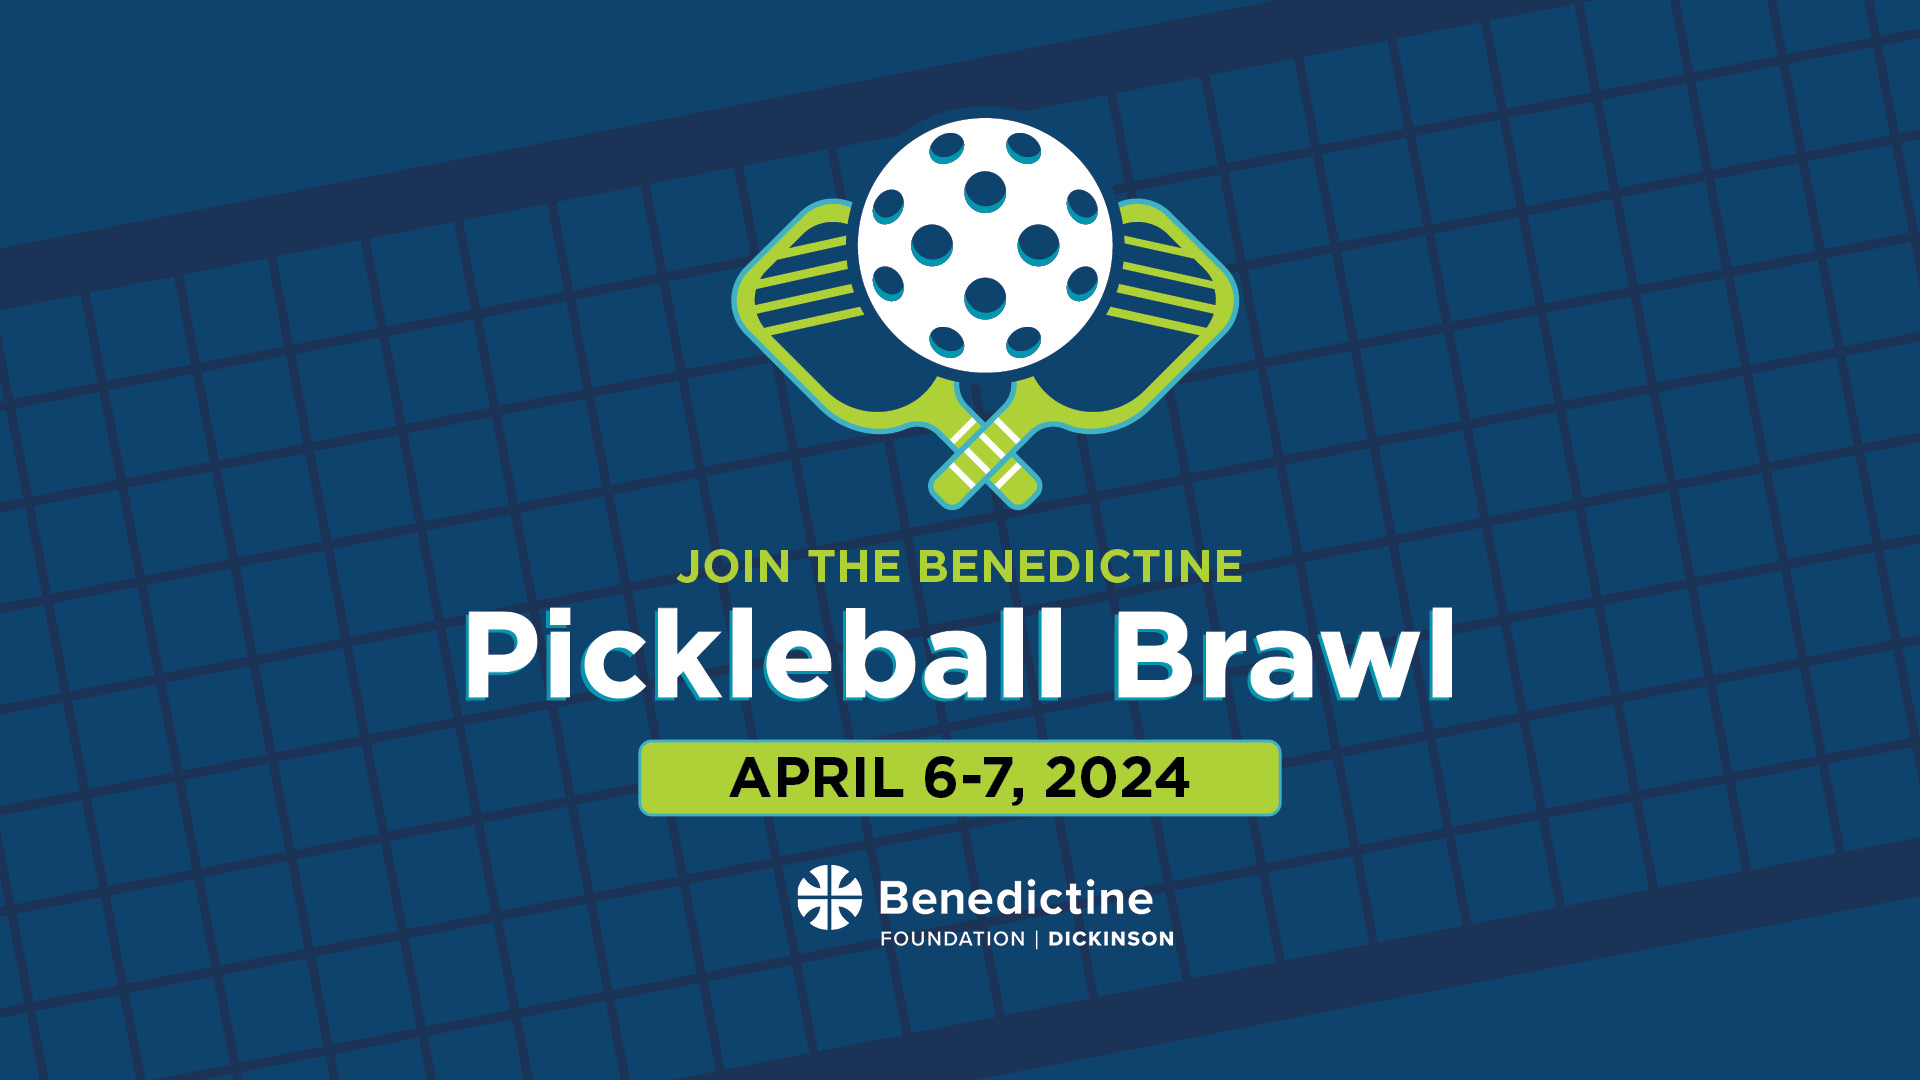 Join the Benedictine Pickleball Brawl April 6-7, 2024.